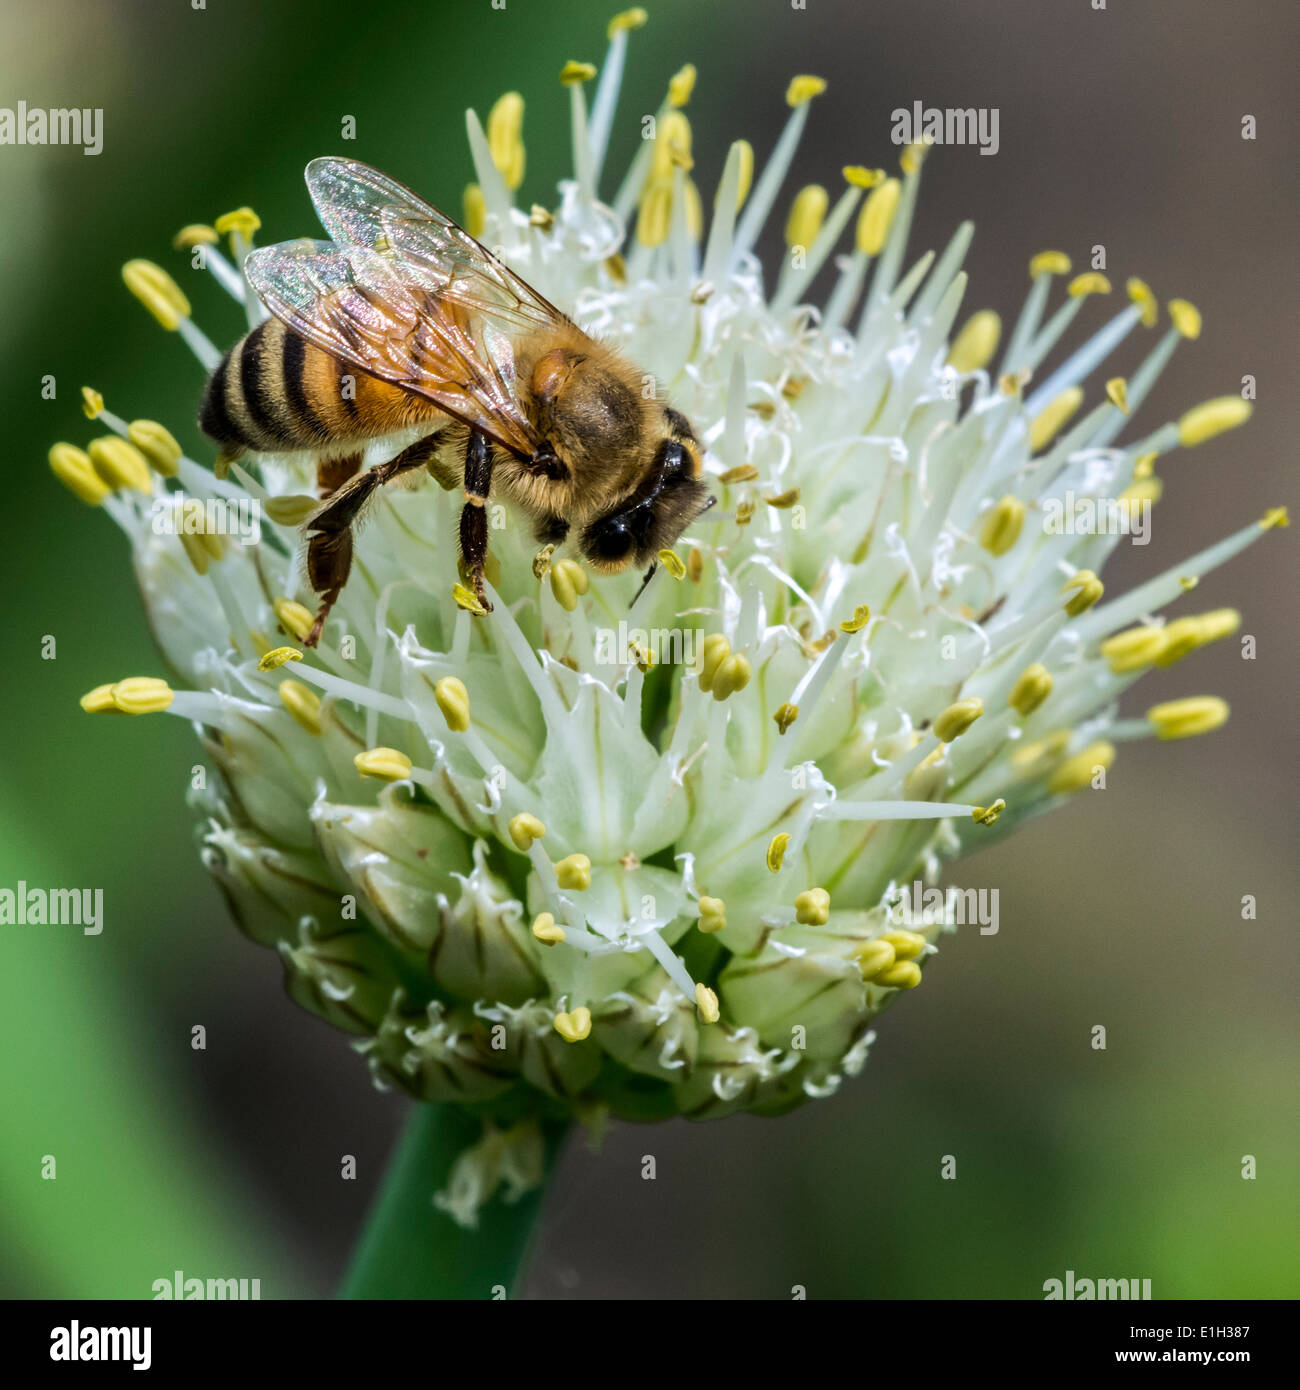 Western honey bee / European honeybee (Apis mellifera) collecting nectar from flower Stock Photo